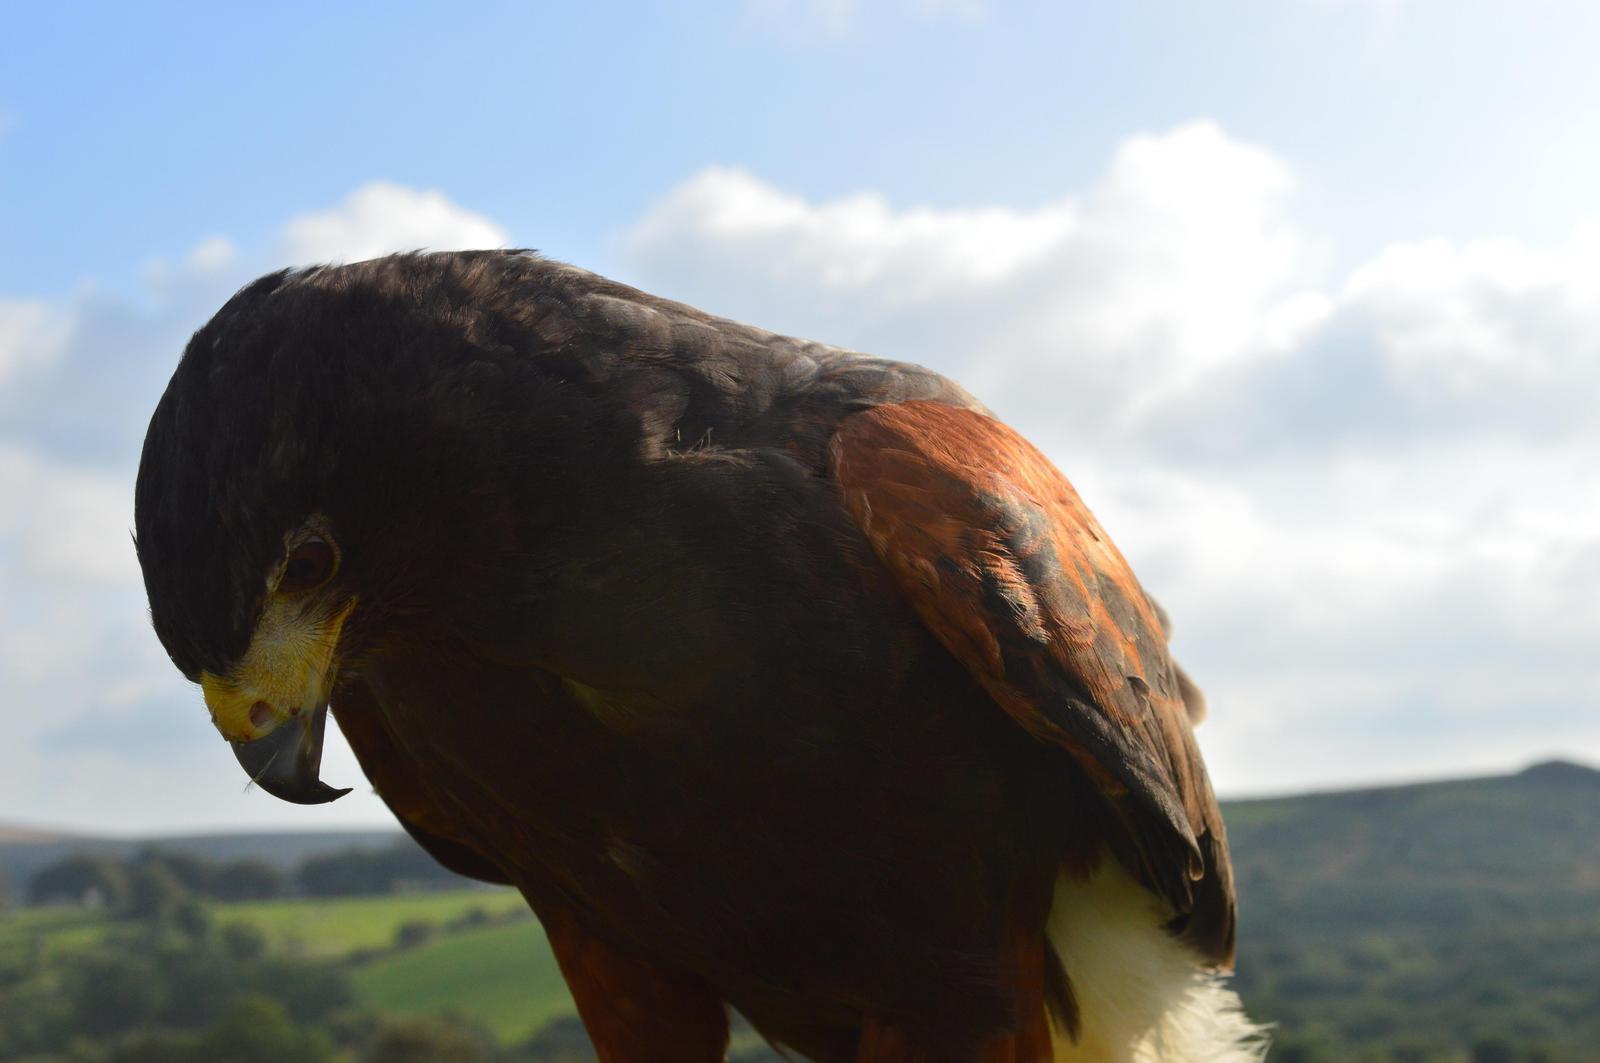 Harris's Hawk Photo by Georgette Parrish